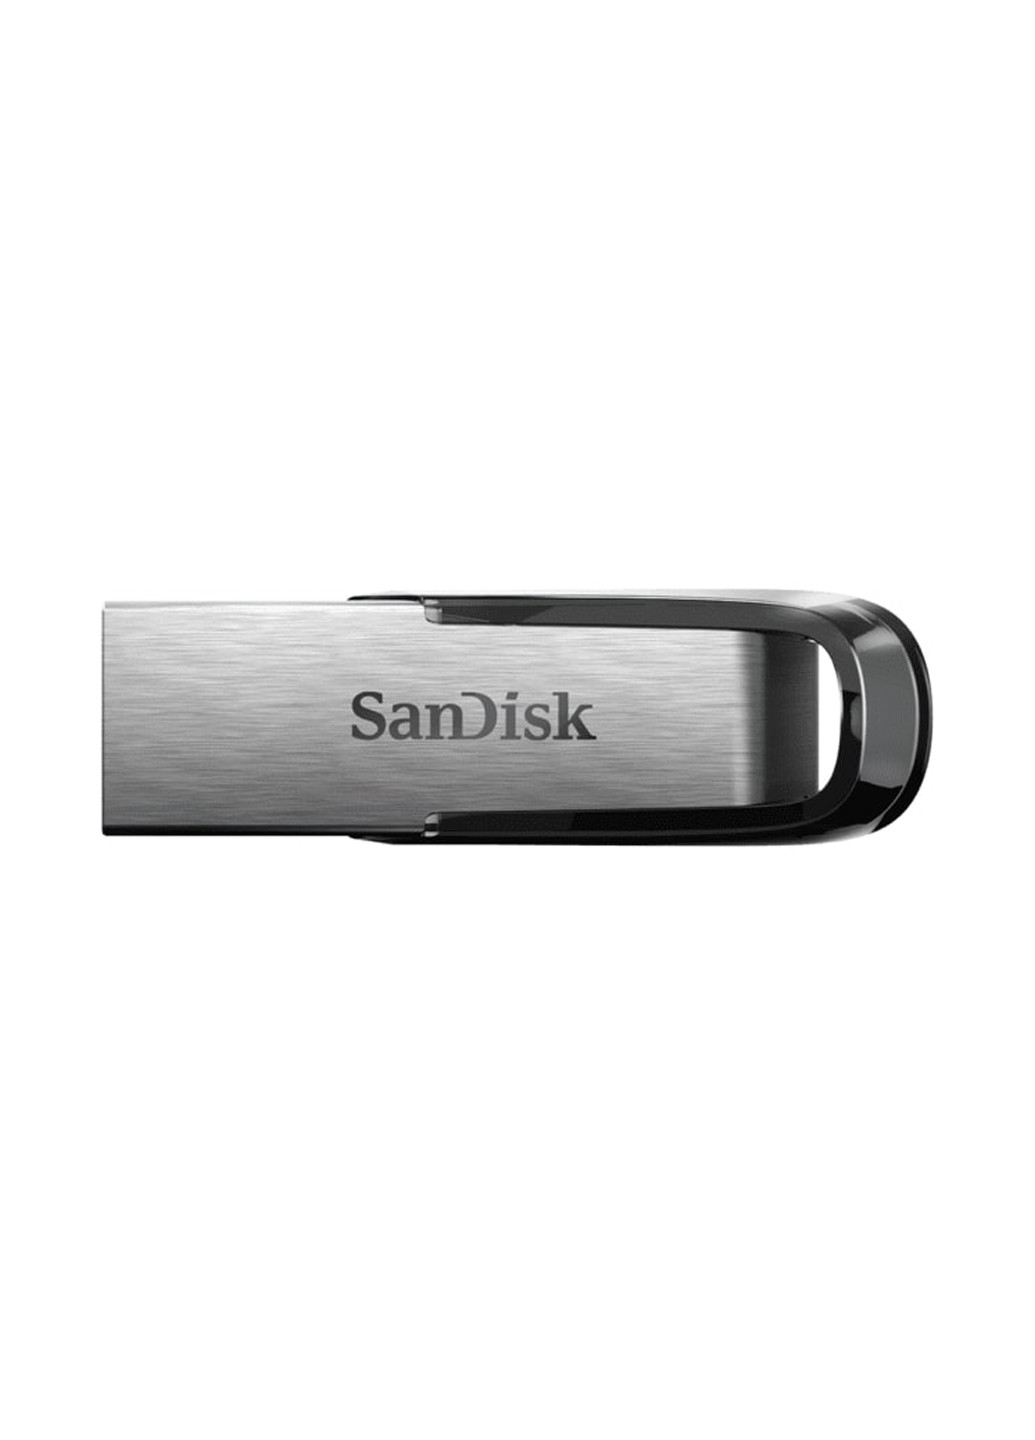 Флеш память USB Ultra Flair 32GB USB 3.0 Black (SDCZ73-032G-G46) SanDisk флеш память usb sandisk ultra flair 32gb usb 3.0 black (sdcz73-032g-g46) (135165490)